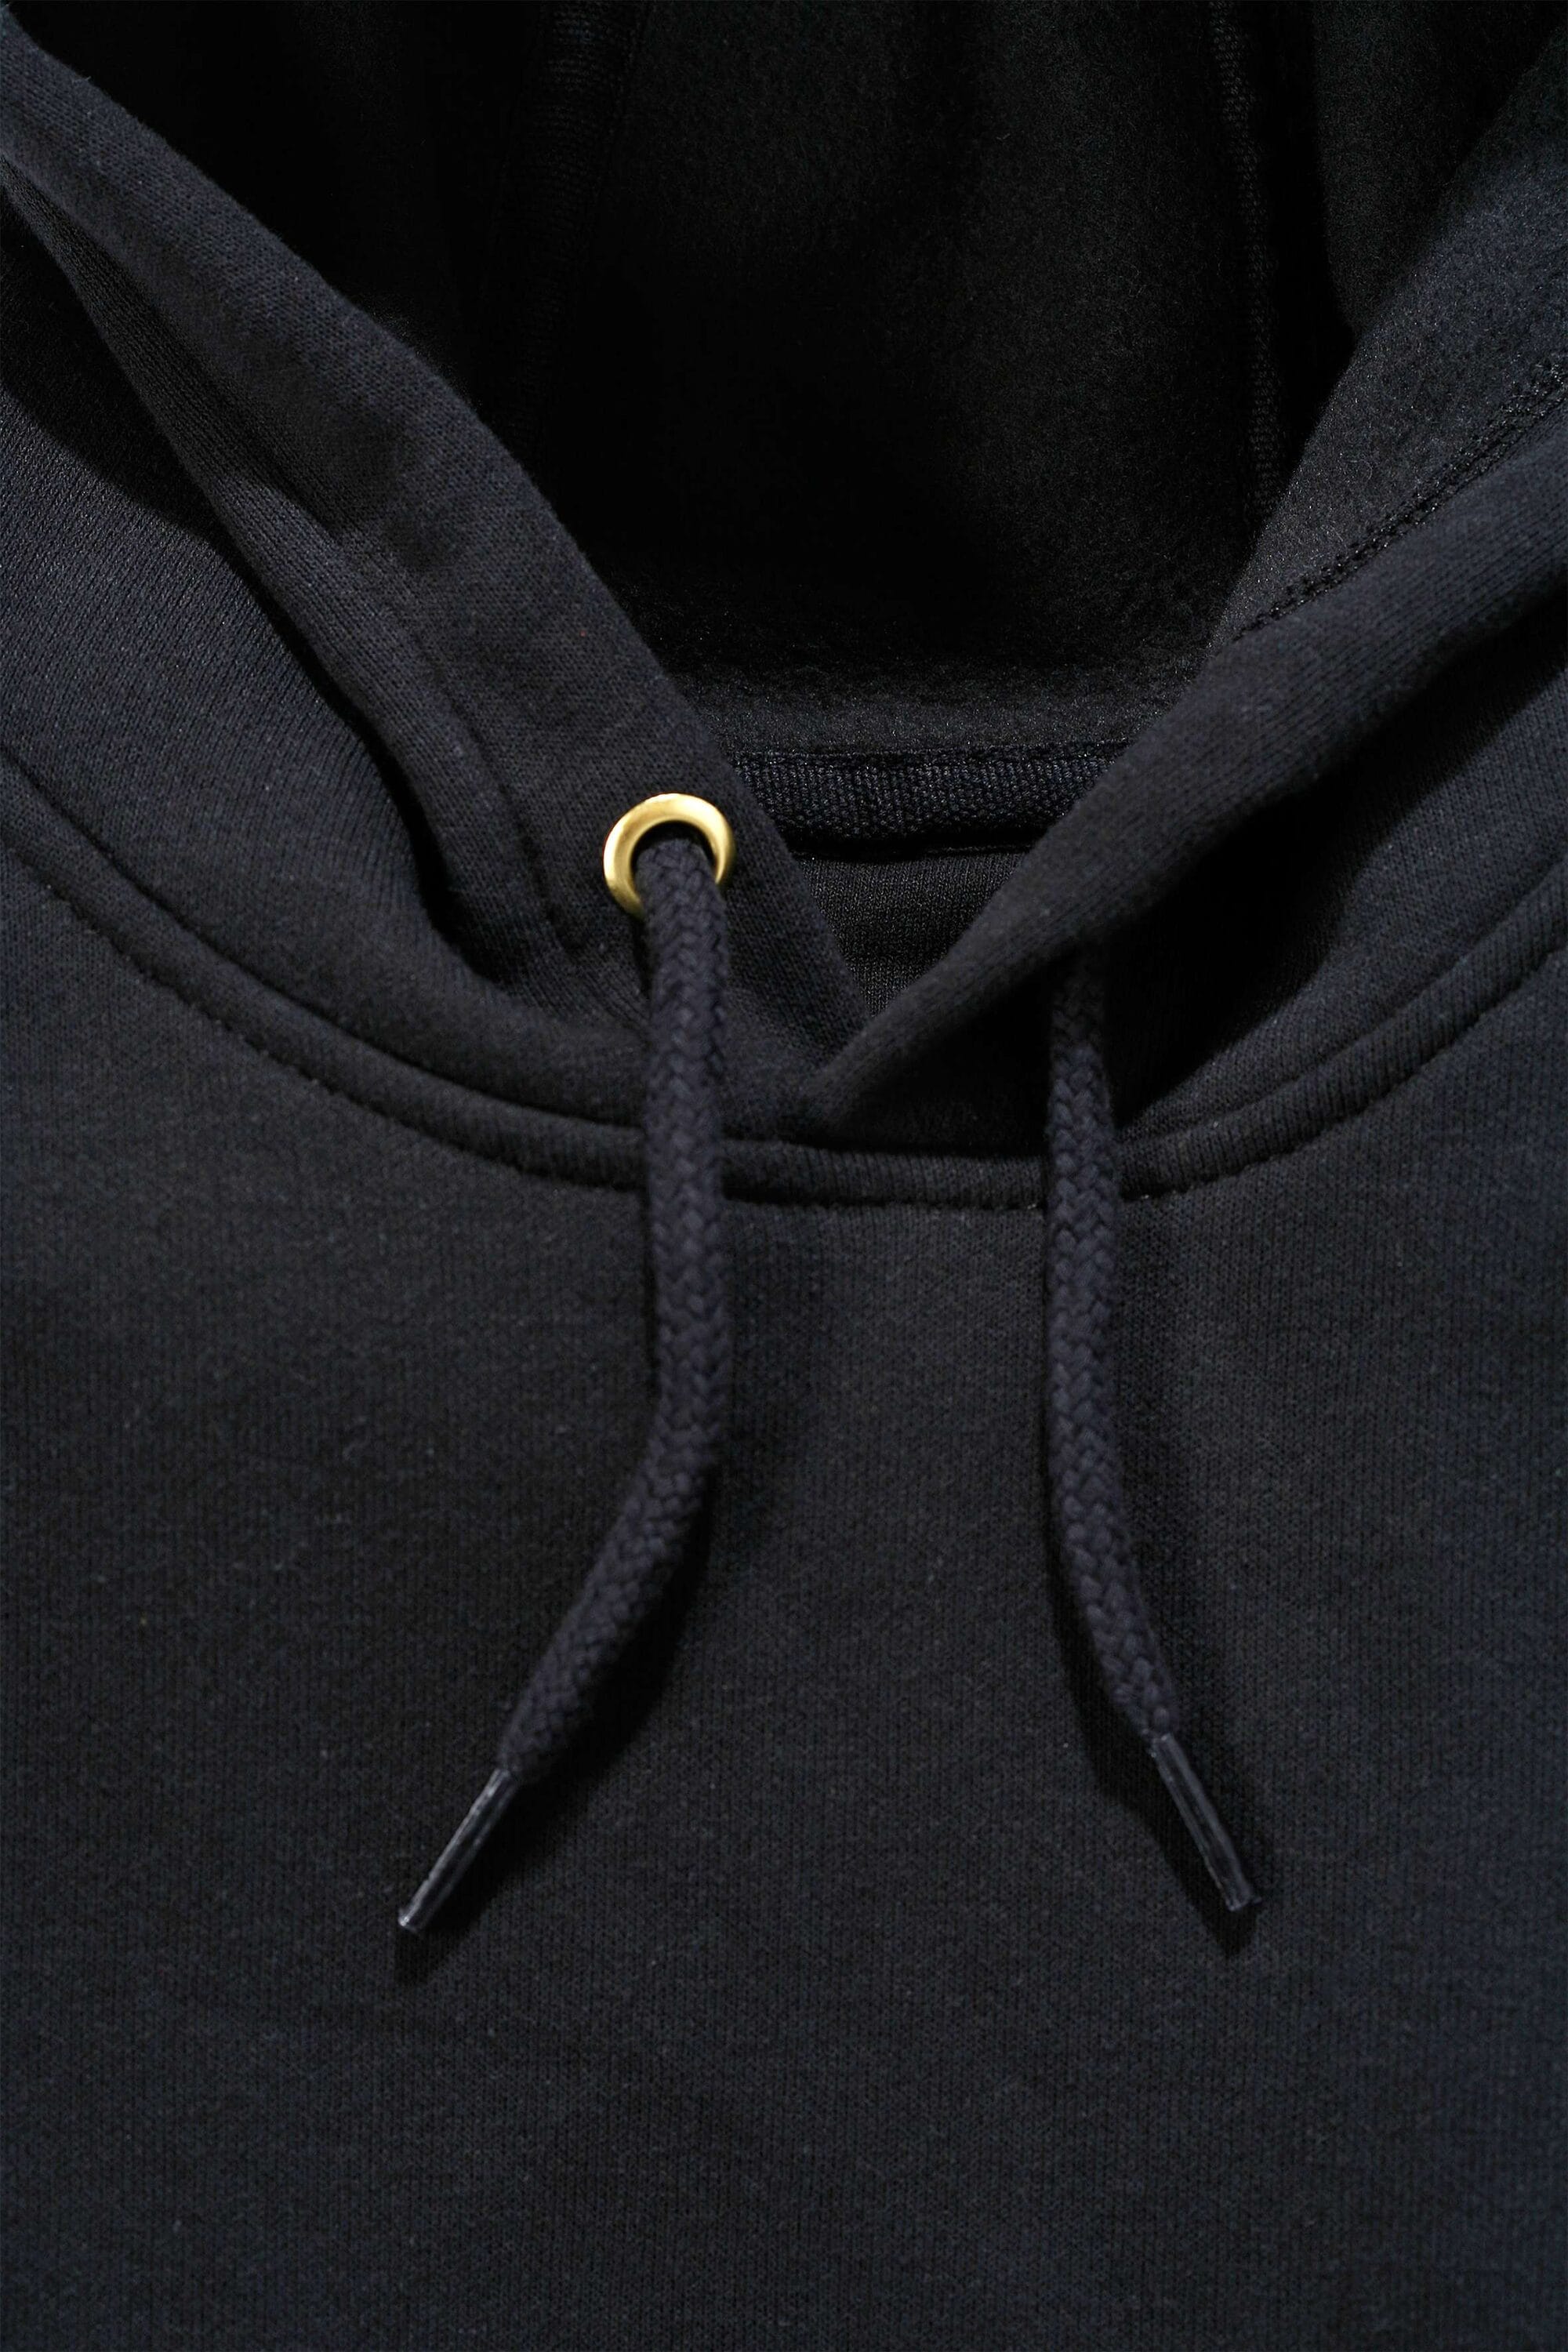 Carhartt Men's Fleece Long Sleeve Graphic Hoodie (Large Tall) in